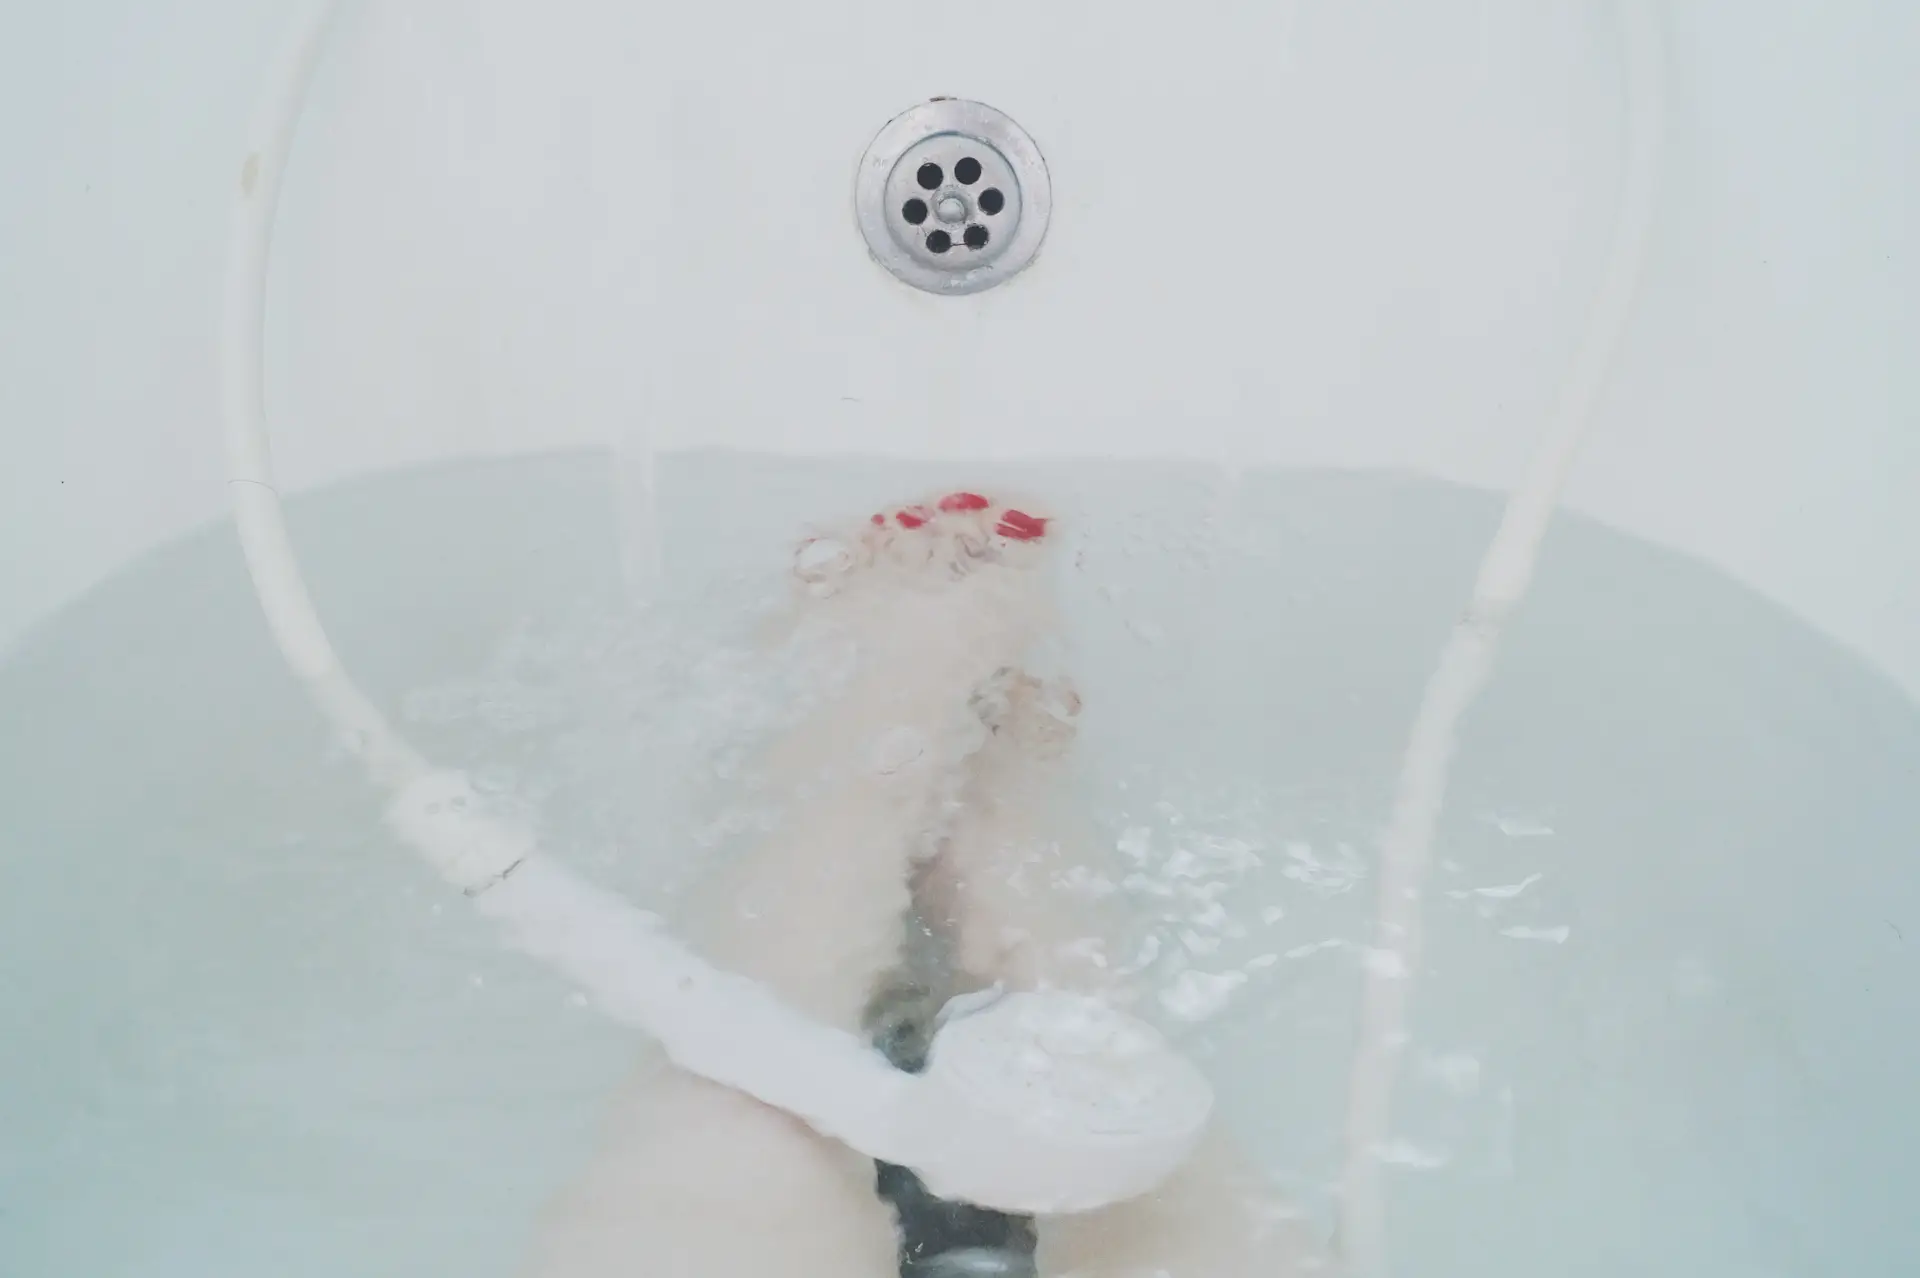 a woman's feet in a bathtub with a handheld shower head